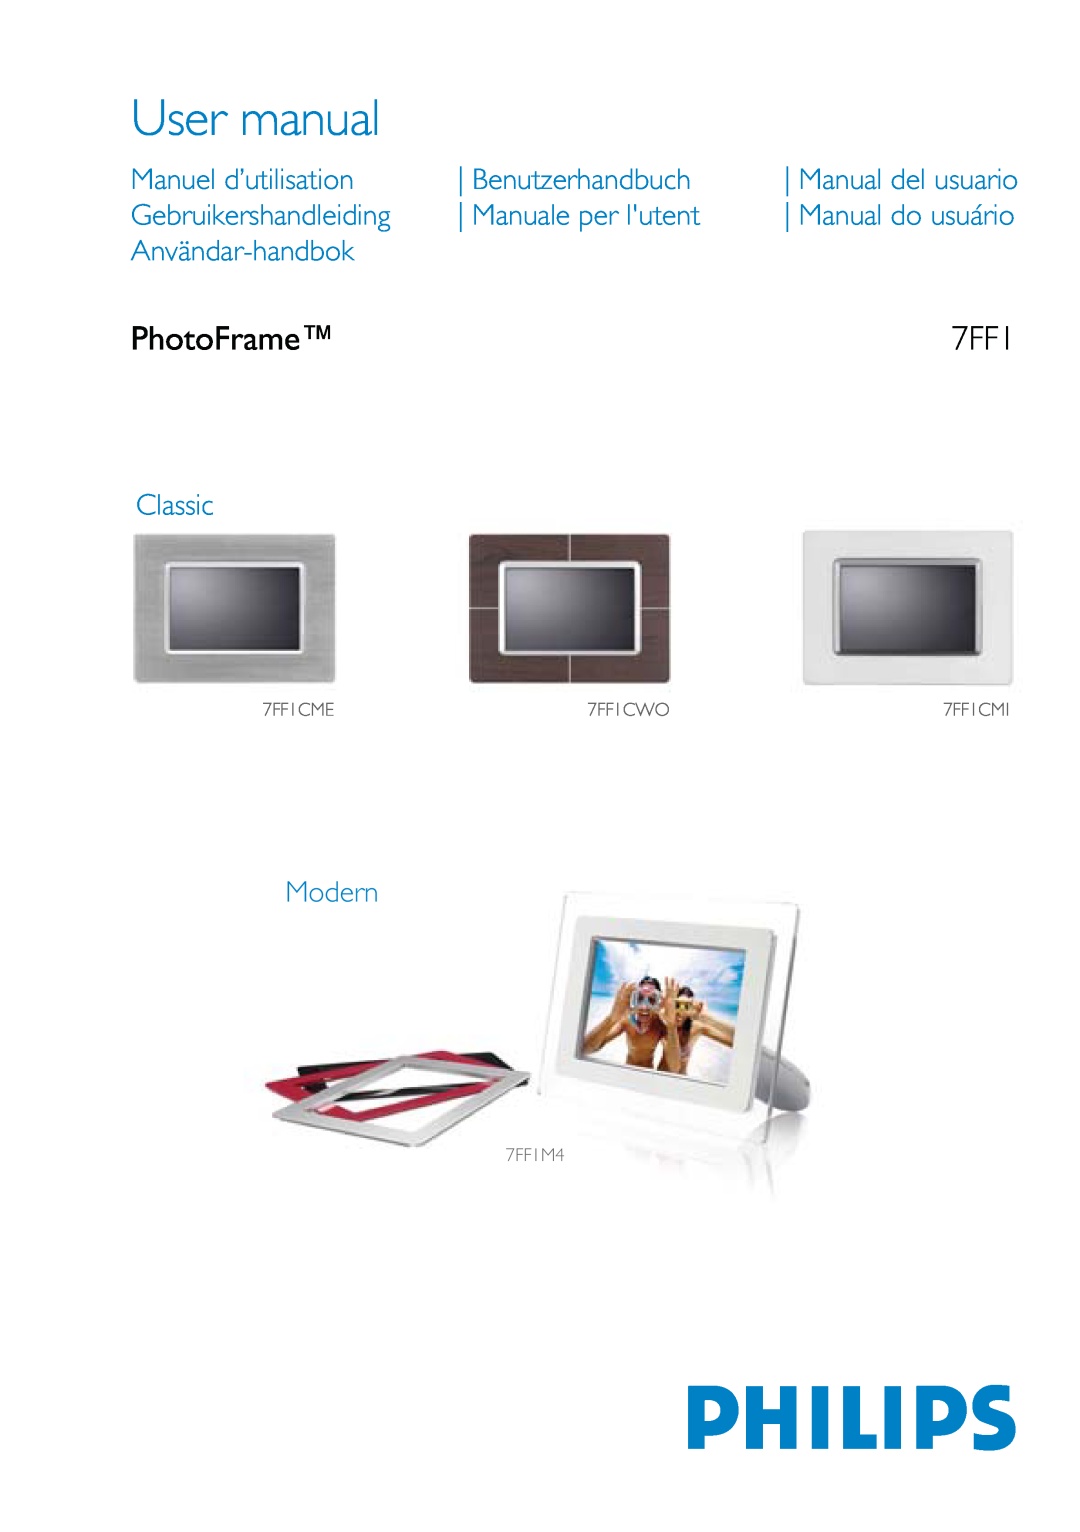 Philips 7FF1CWO user manual User manual, PhotoFrame, Manuel d’utilisation, Benutzerhandbuch, Gebruikershandleiding, Modern 